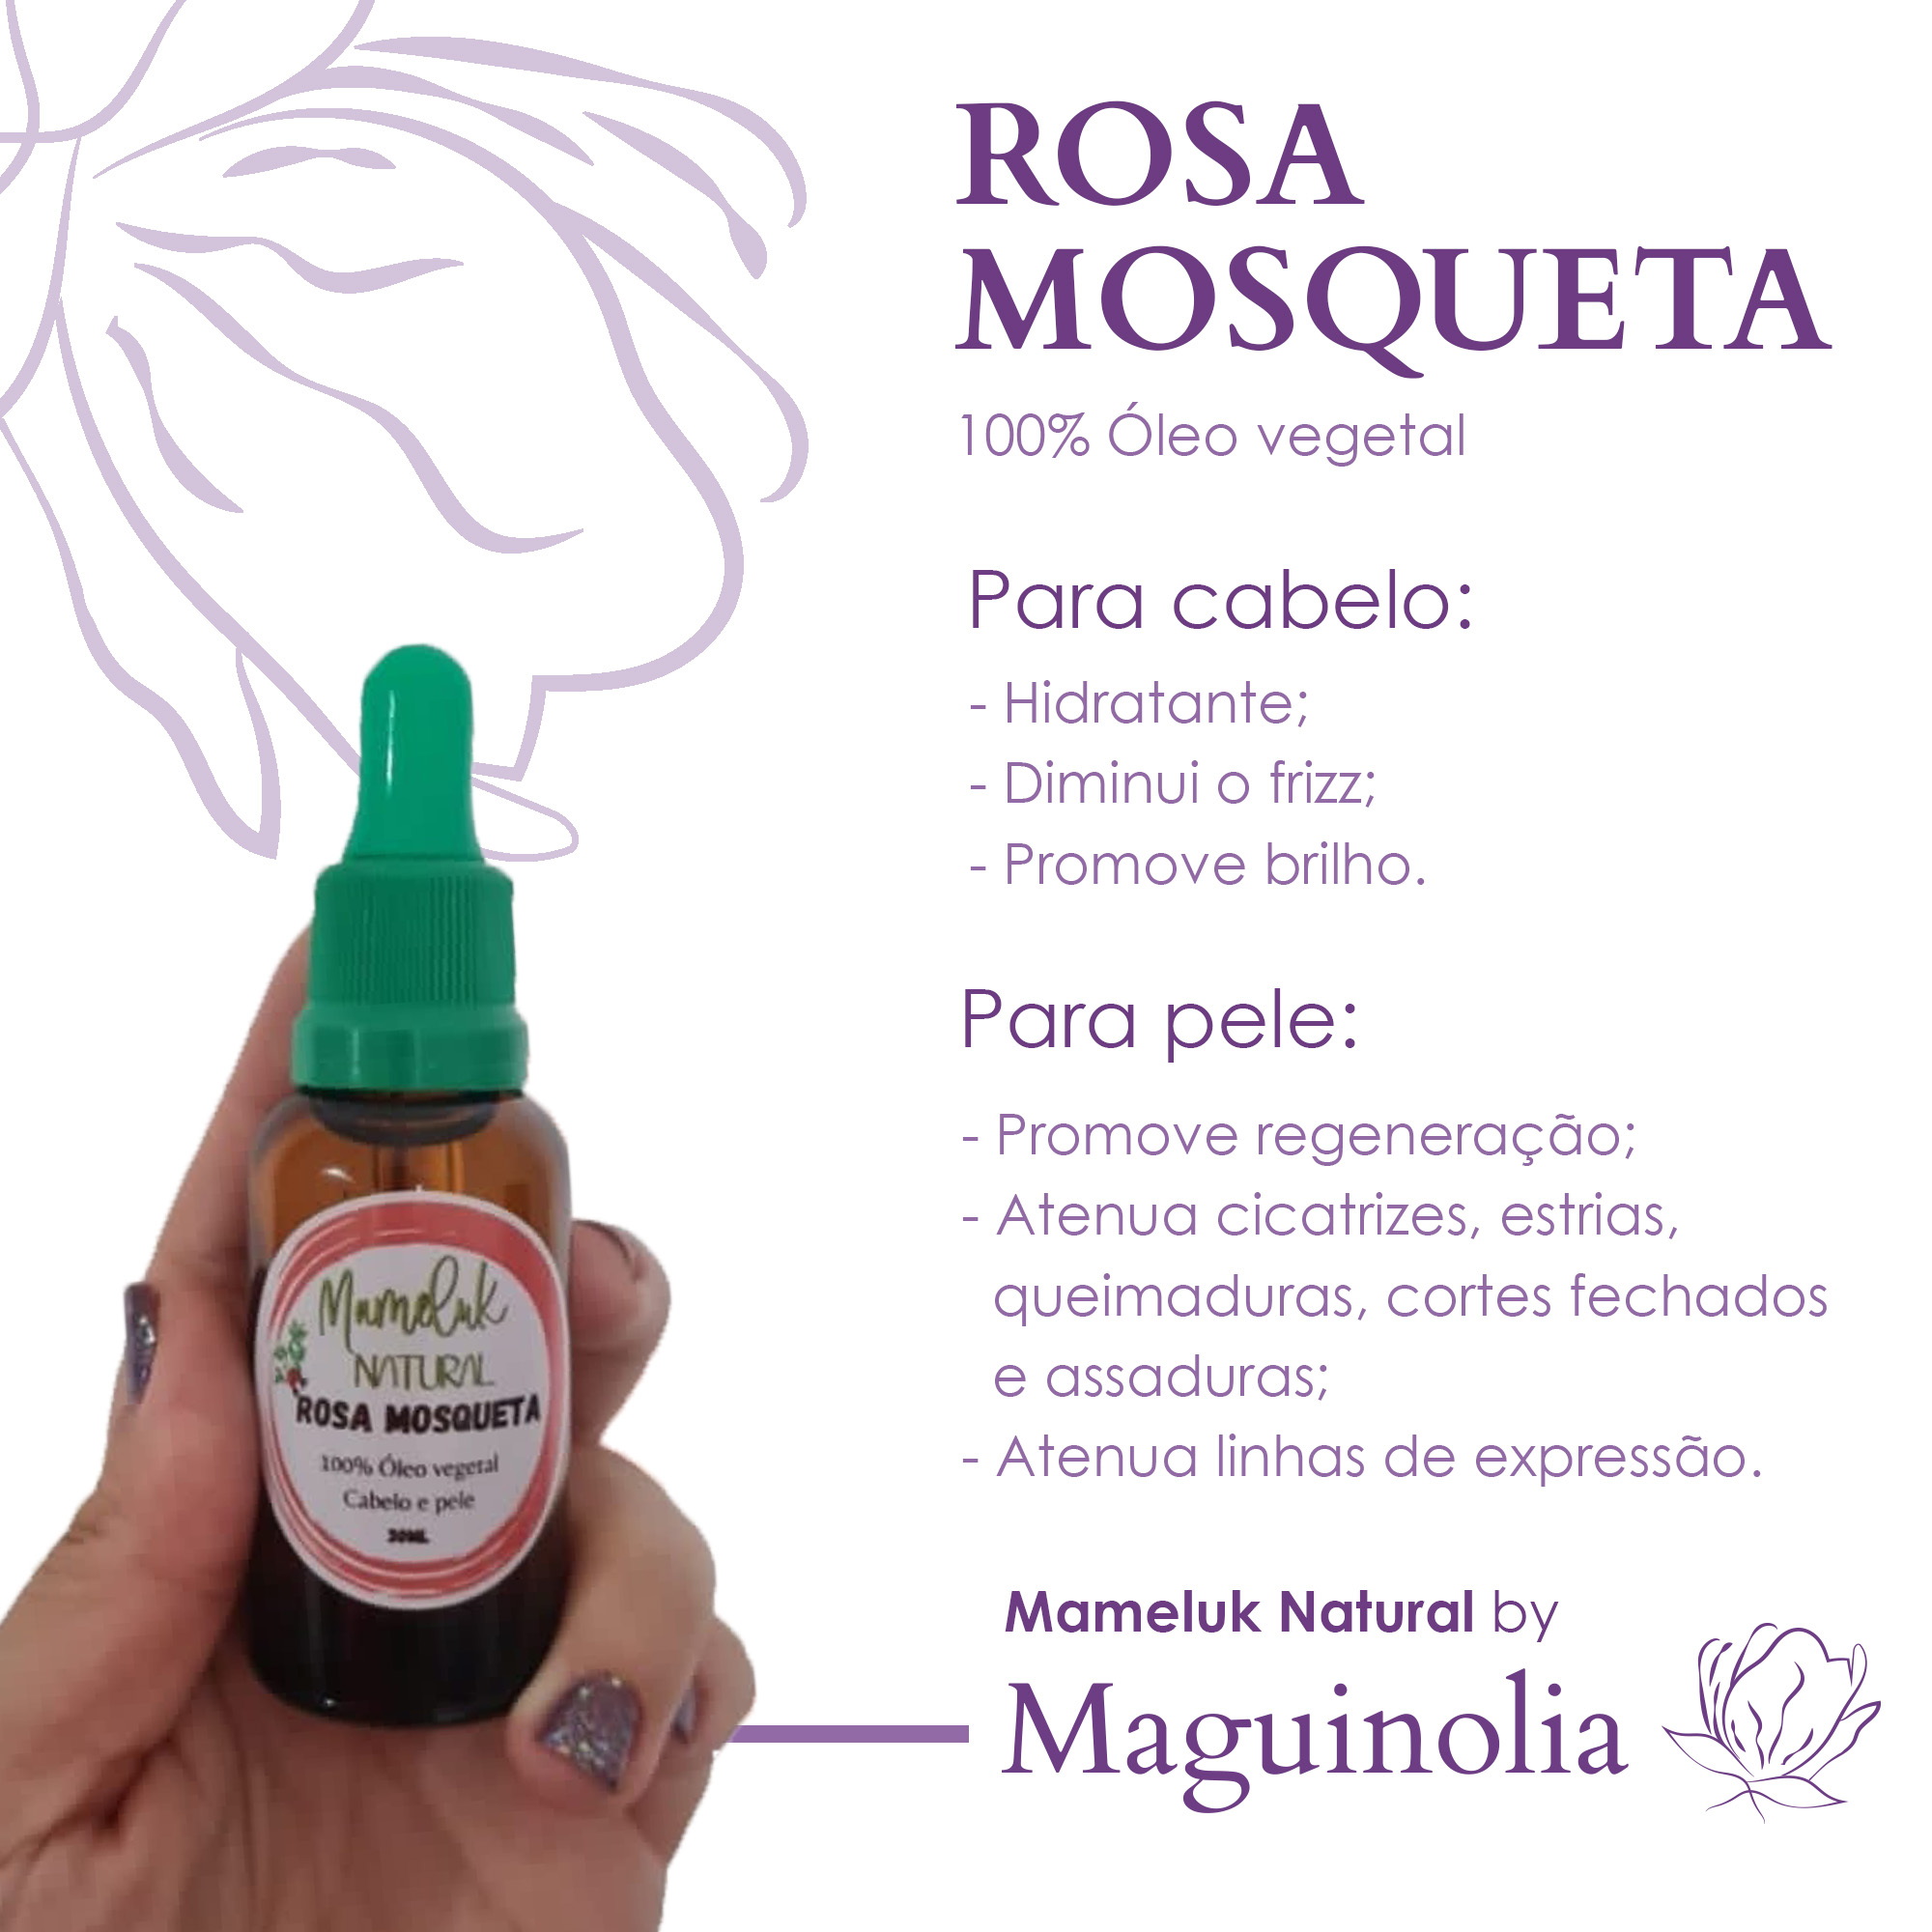 Rosa mosqueta